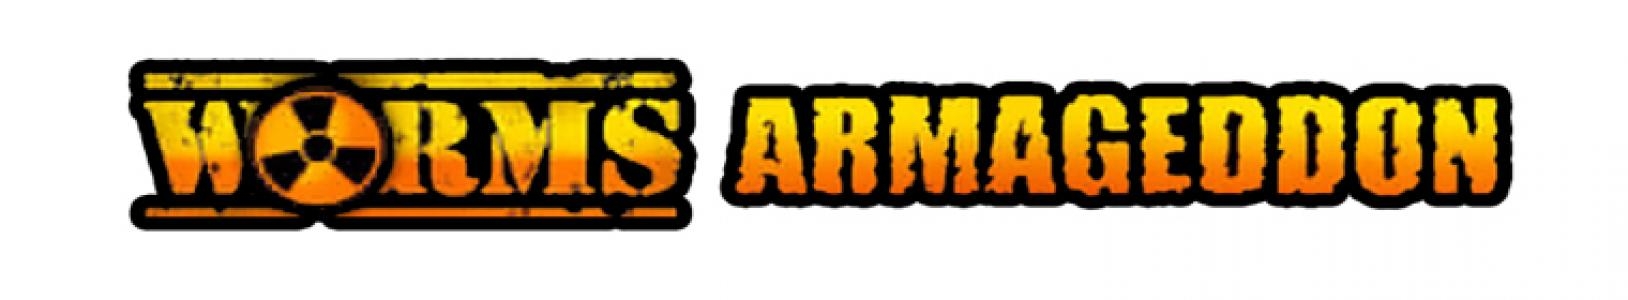 Worms Armageddon banner